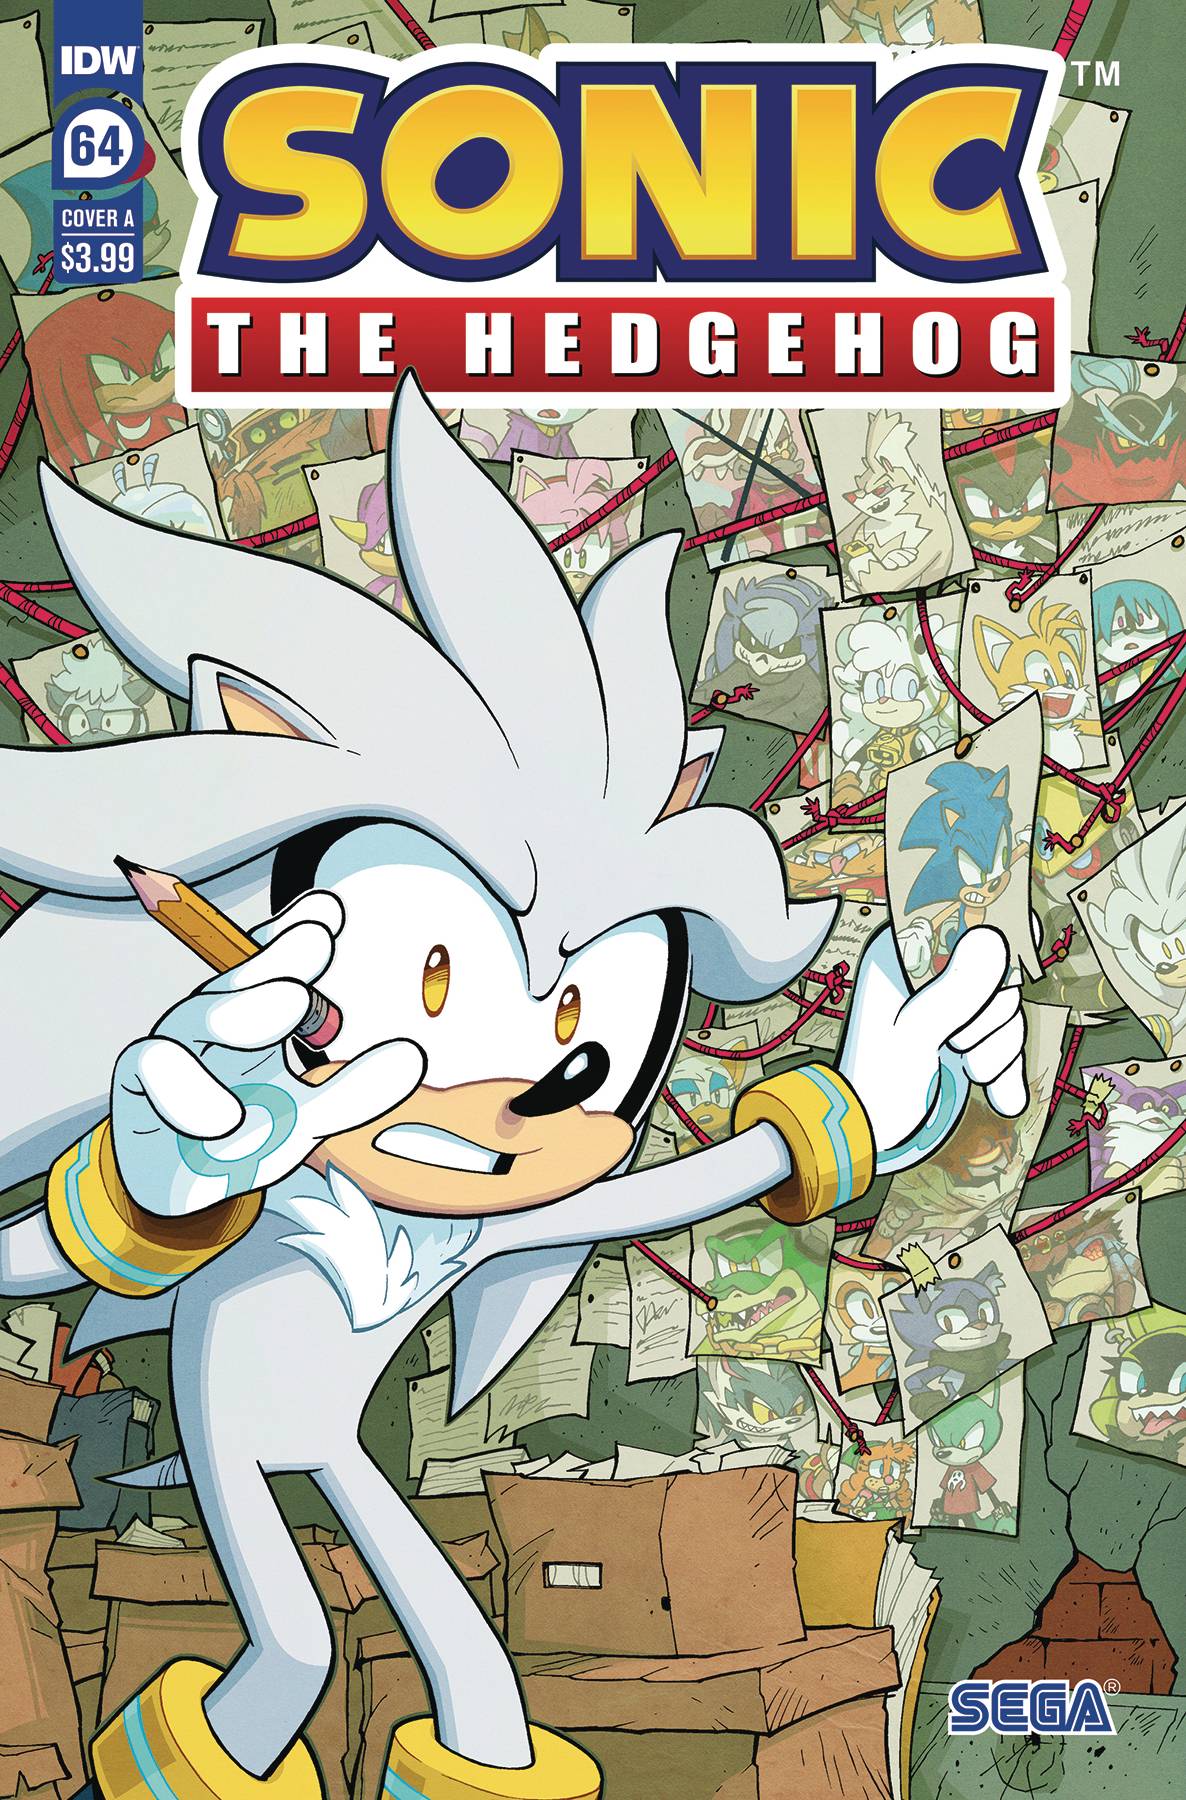 Sonic the hedgehog 64